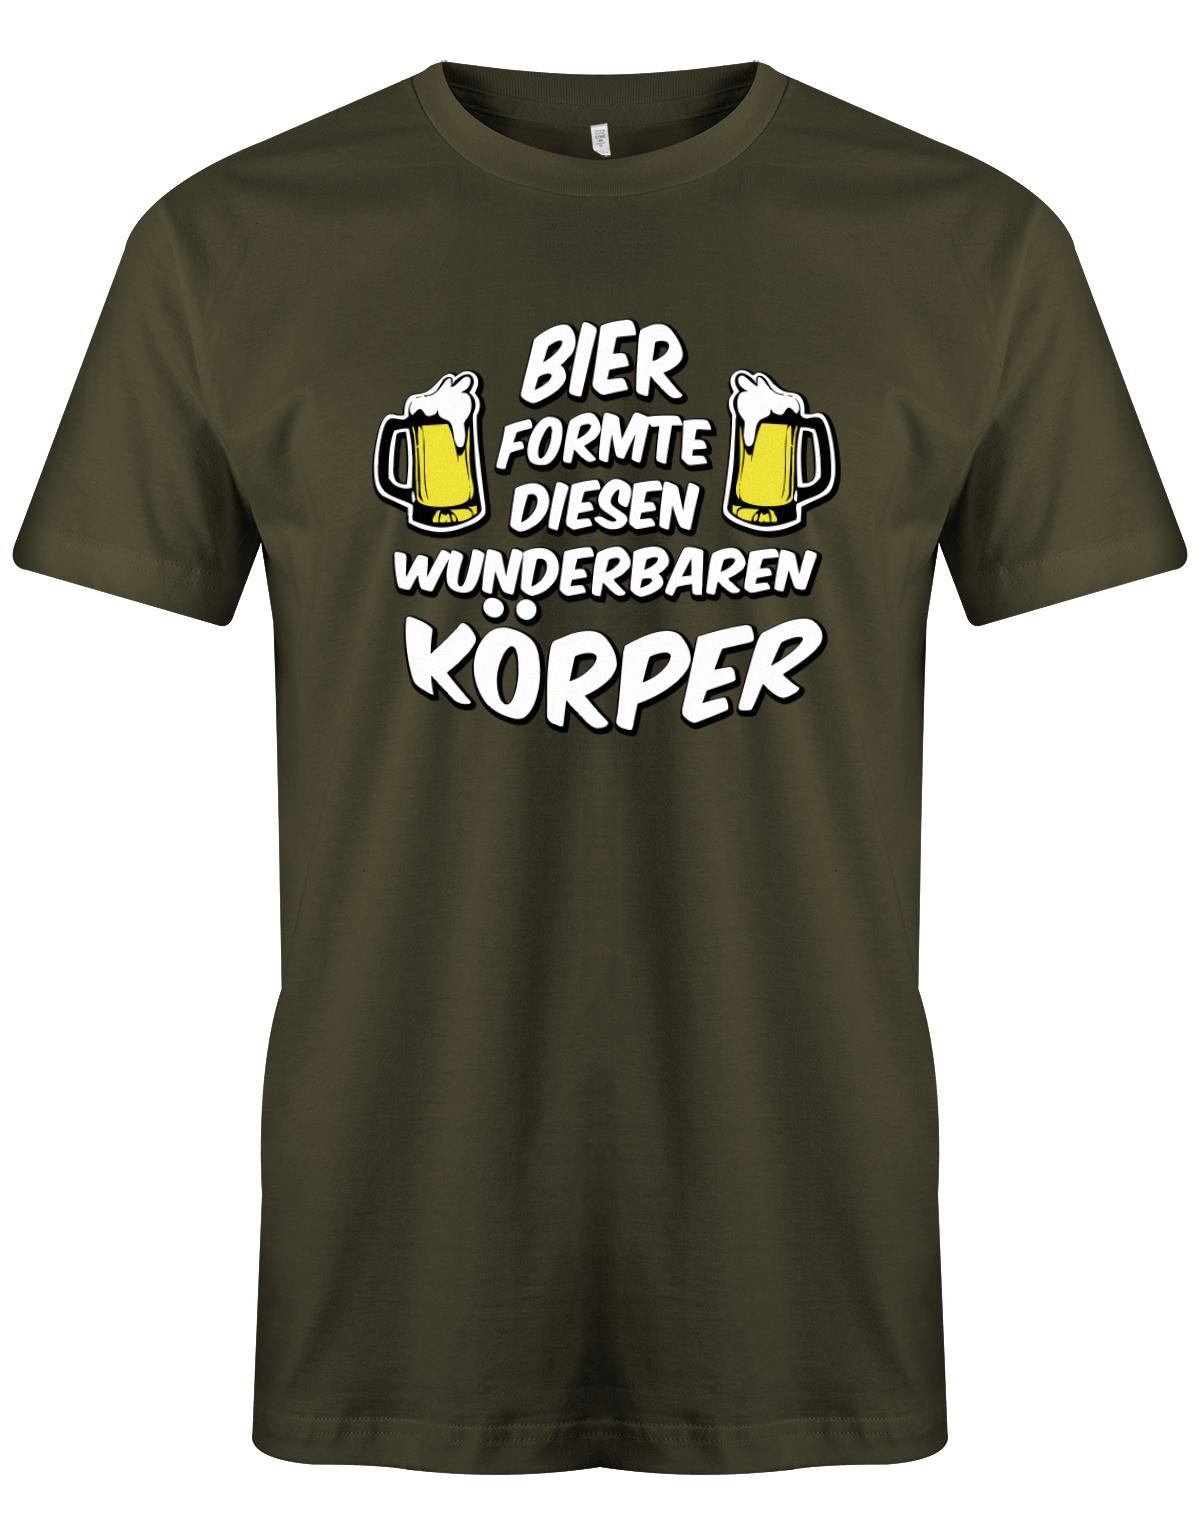 Bier-formte-dieses-wunderbaren-K-rper-Herren-Shirt-Army